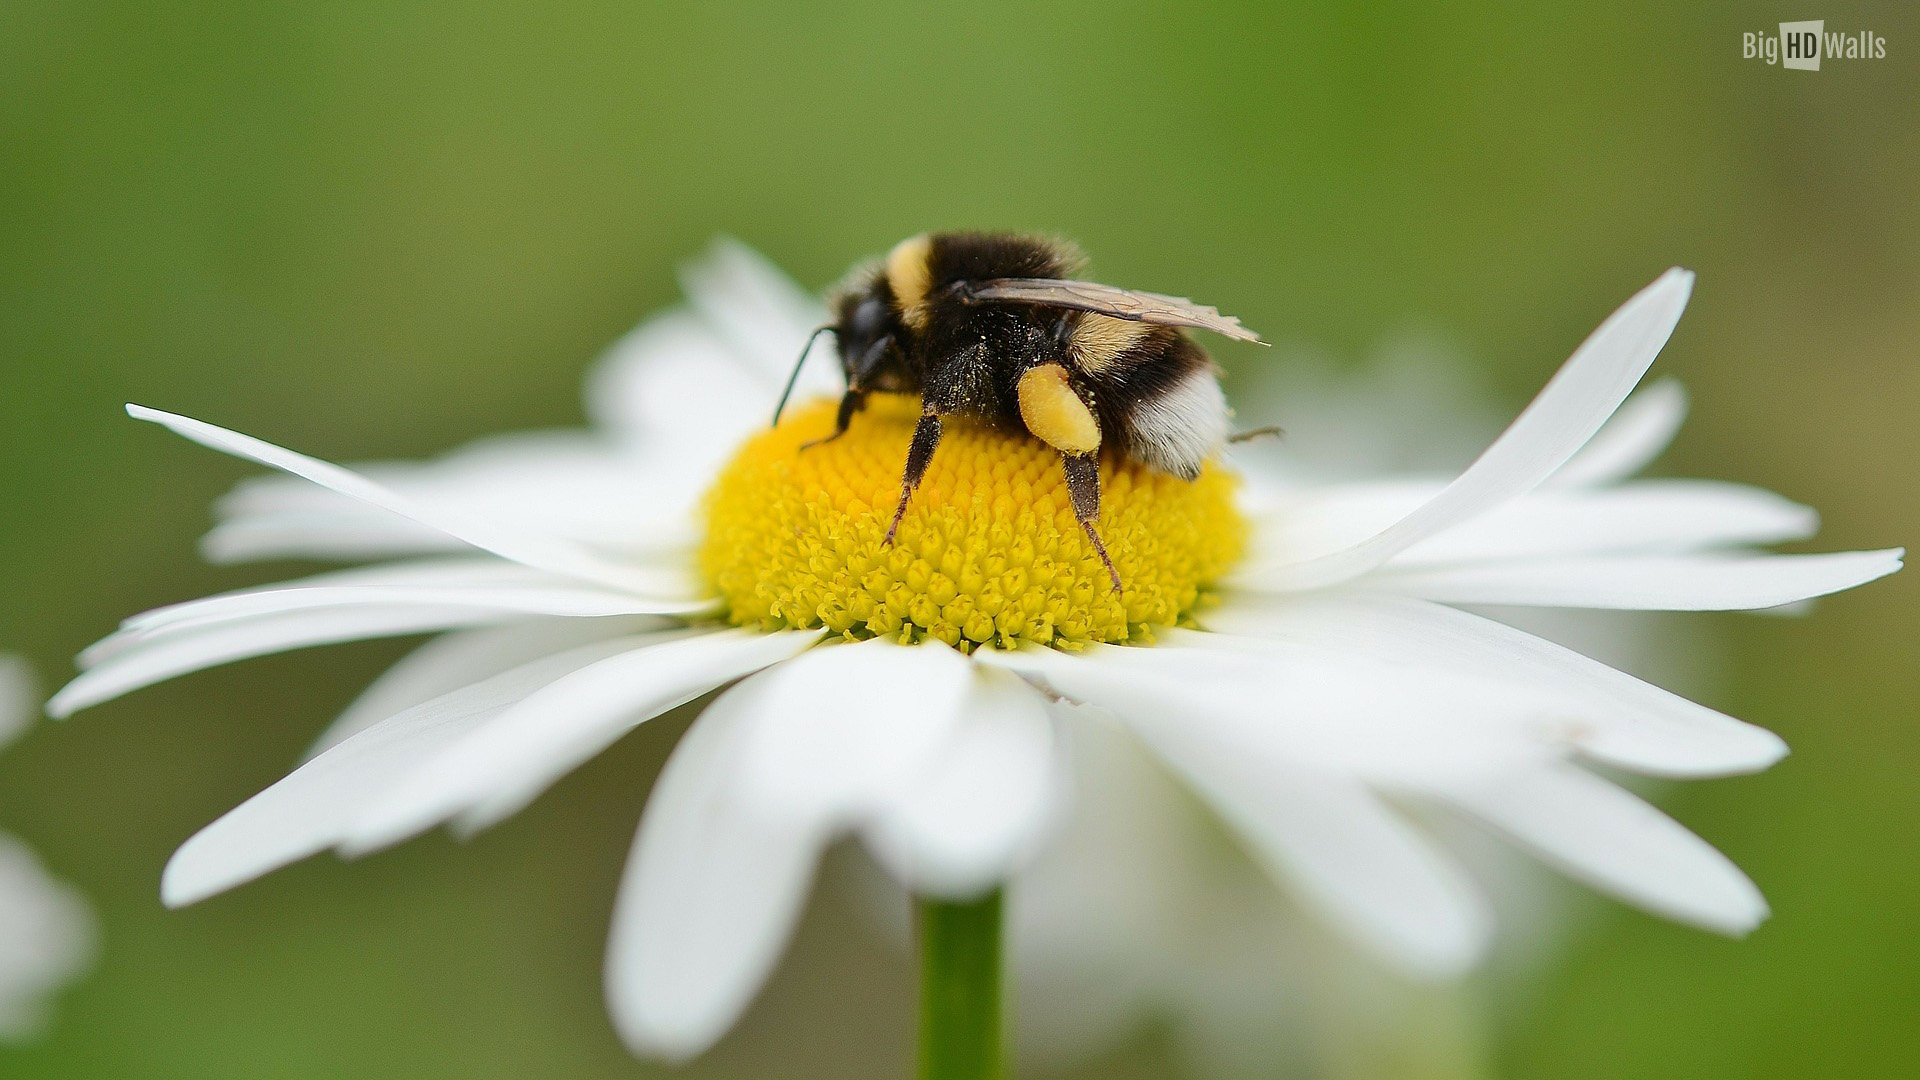 Bee on a flower Closeup HD Wall | BigHDWalls